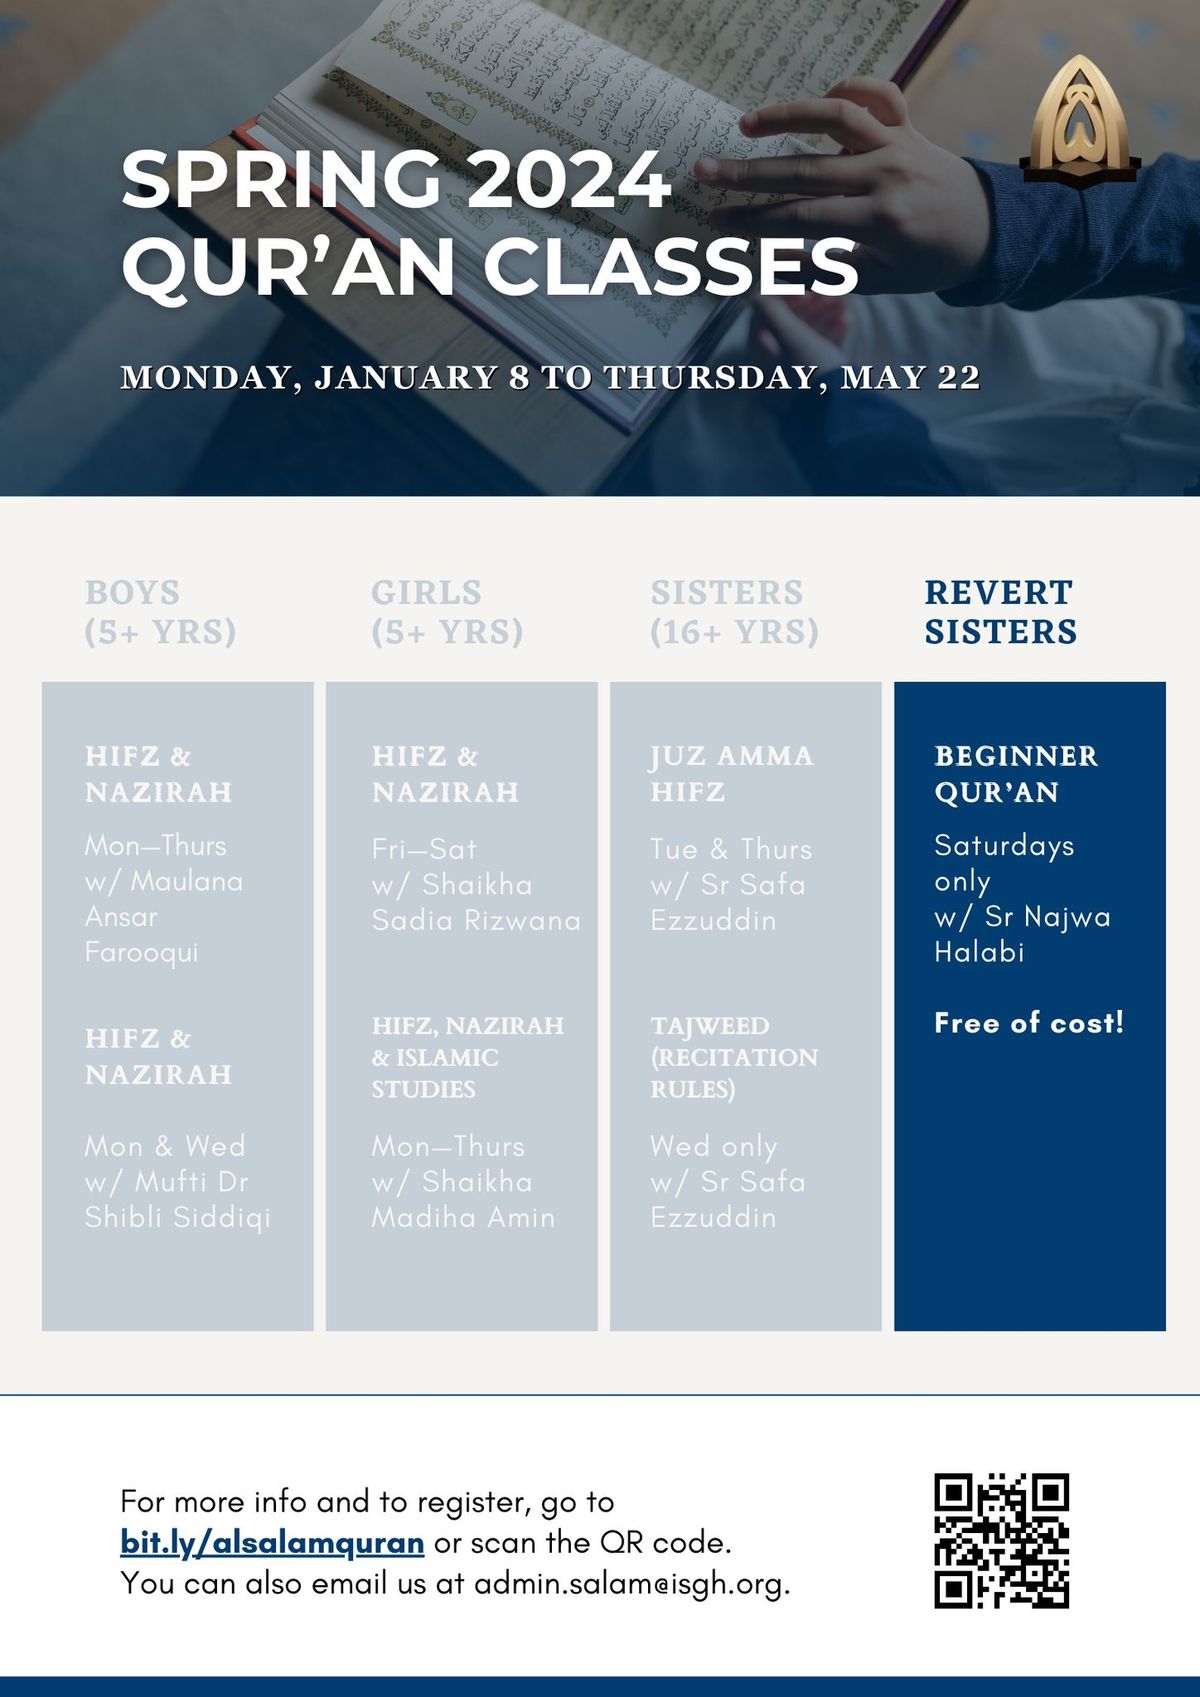 Qur'an for Beginners II (Revert Sisters Only) w\/ Sr Najwa Halabi